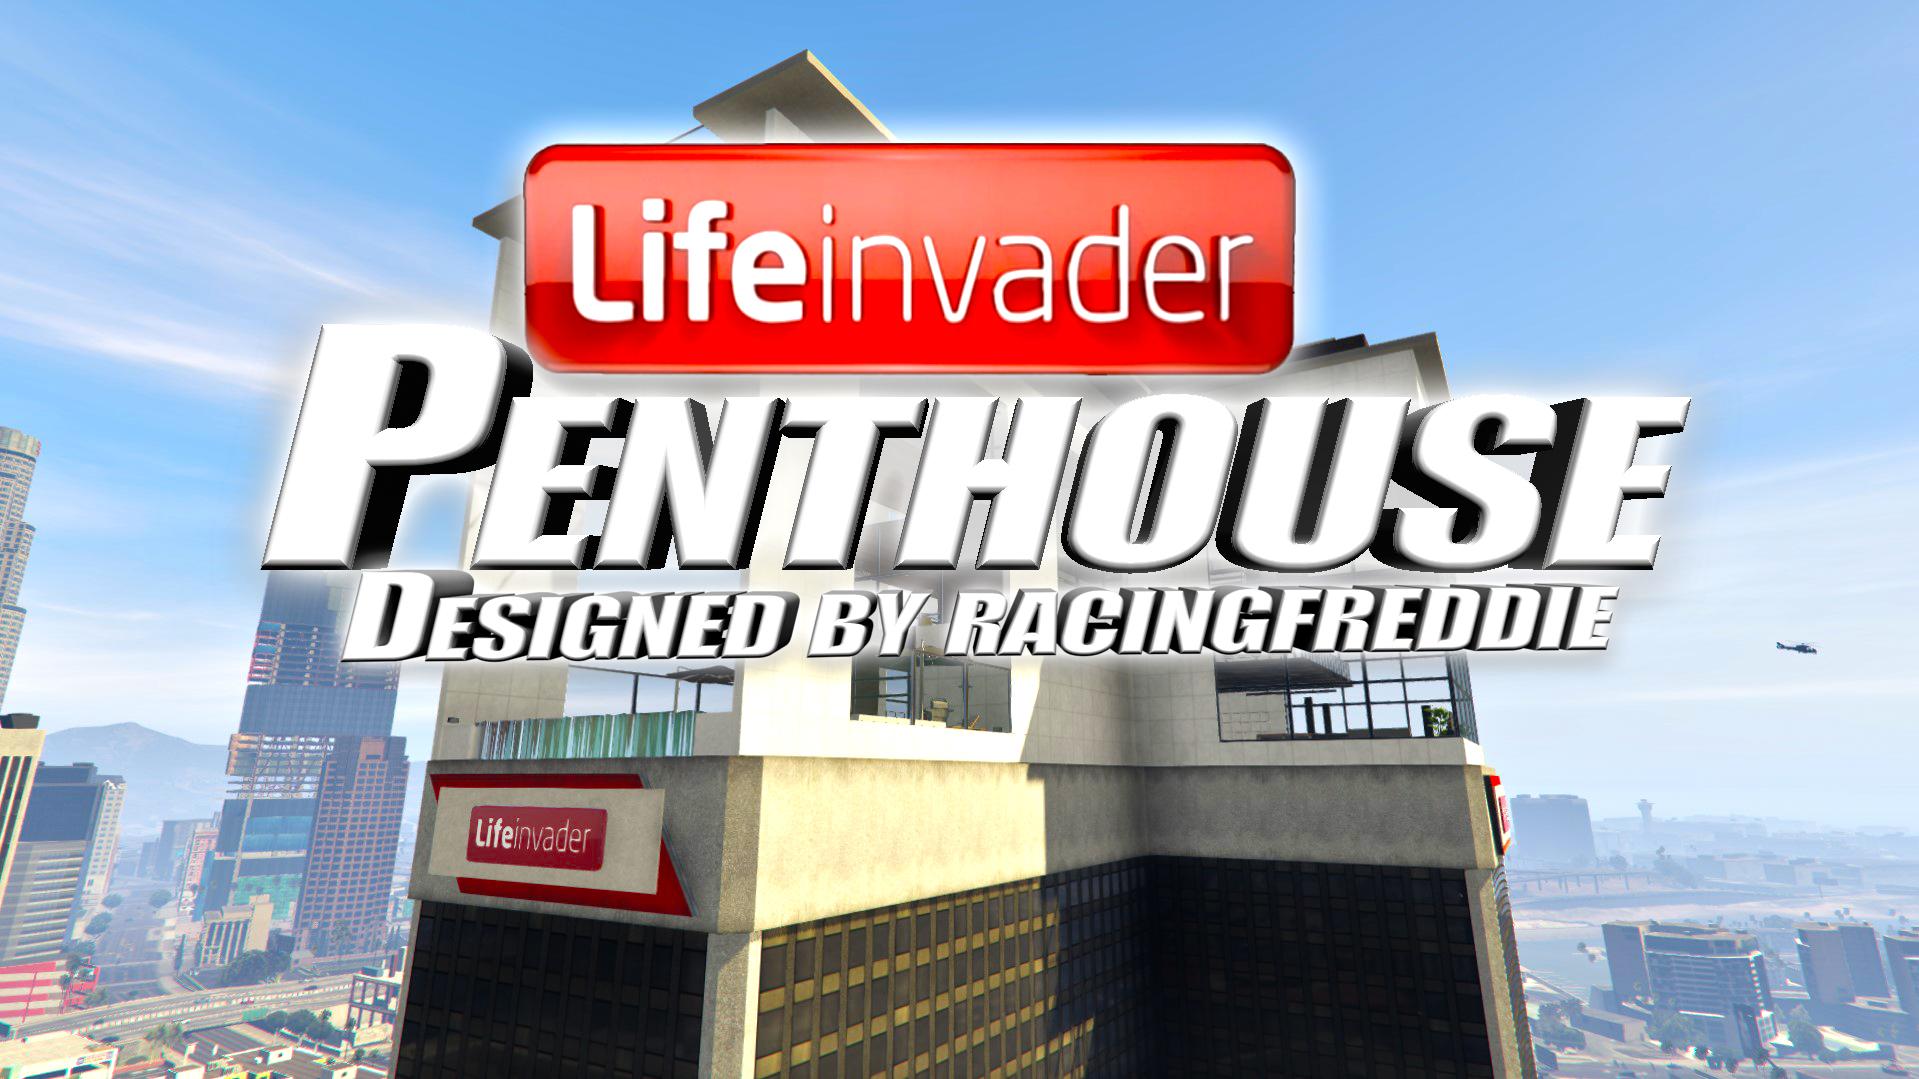 Lifeinvader Penthouse Gta5